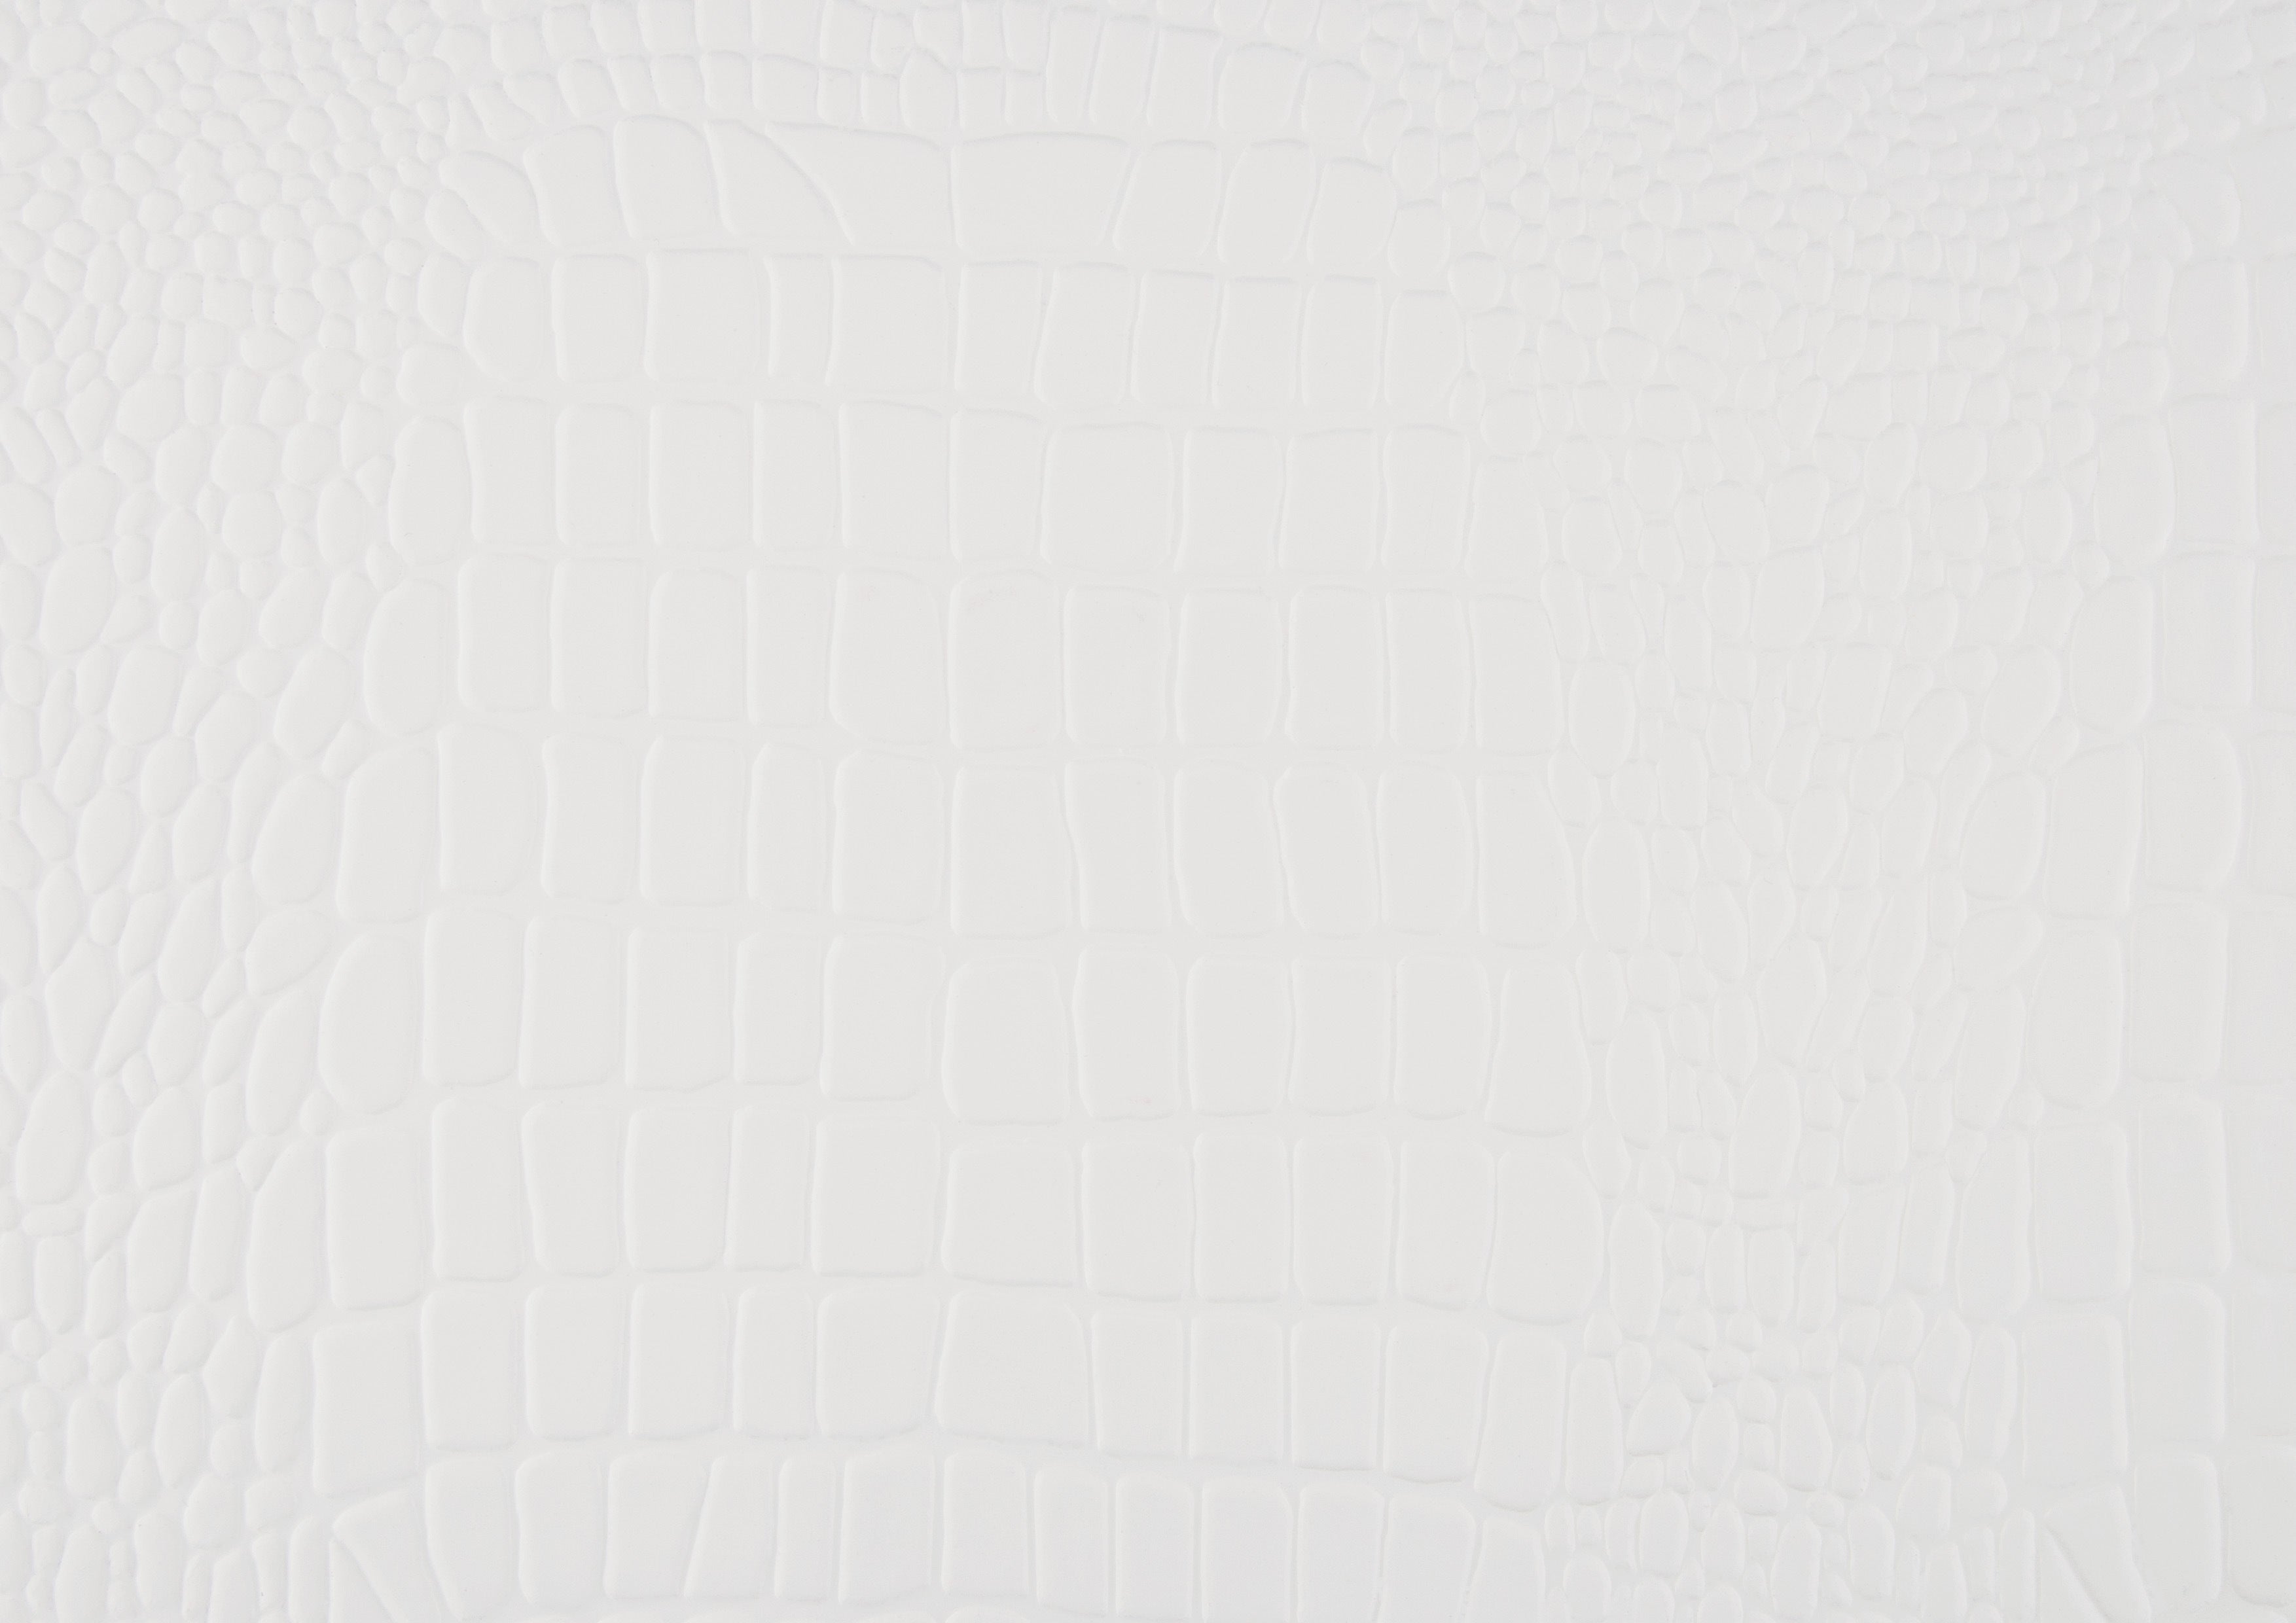 Lana White Twin LED Upholstered Panel Bed - SET | 1556WT-1 | 1556WF-3 - Bien Home Furniture &amp; Electronics